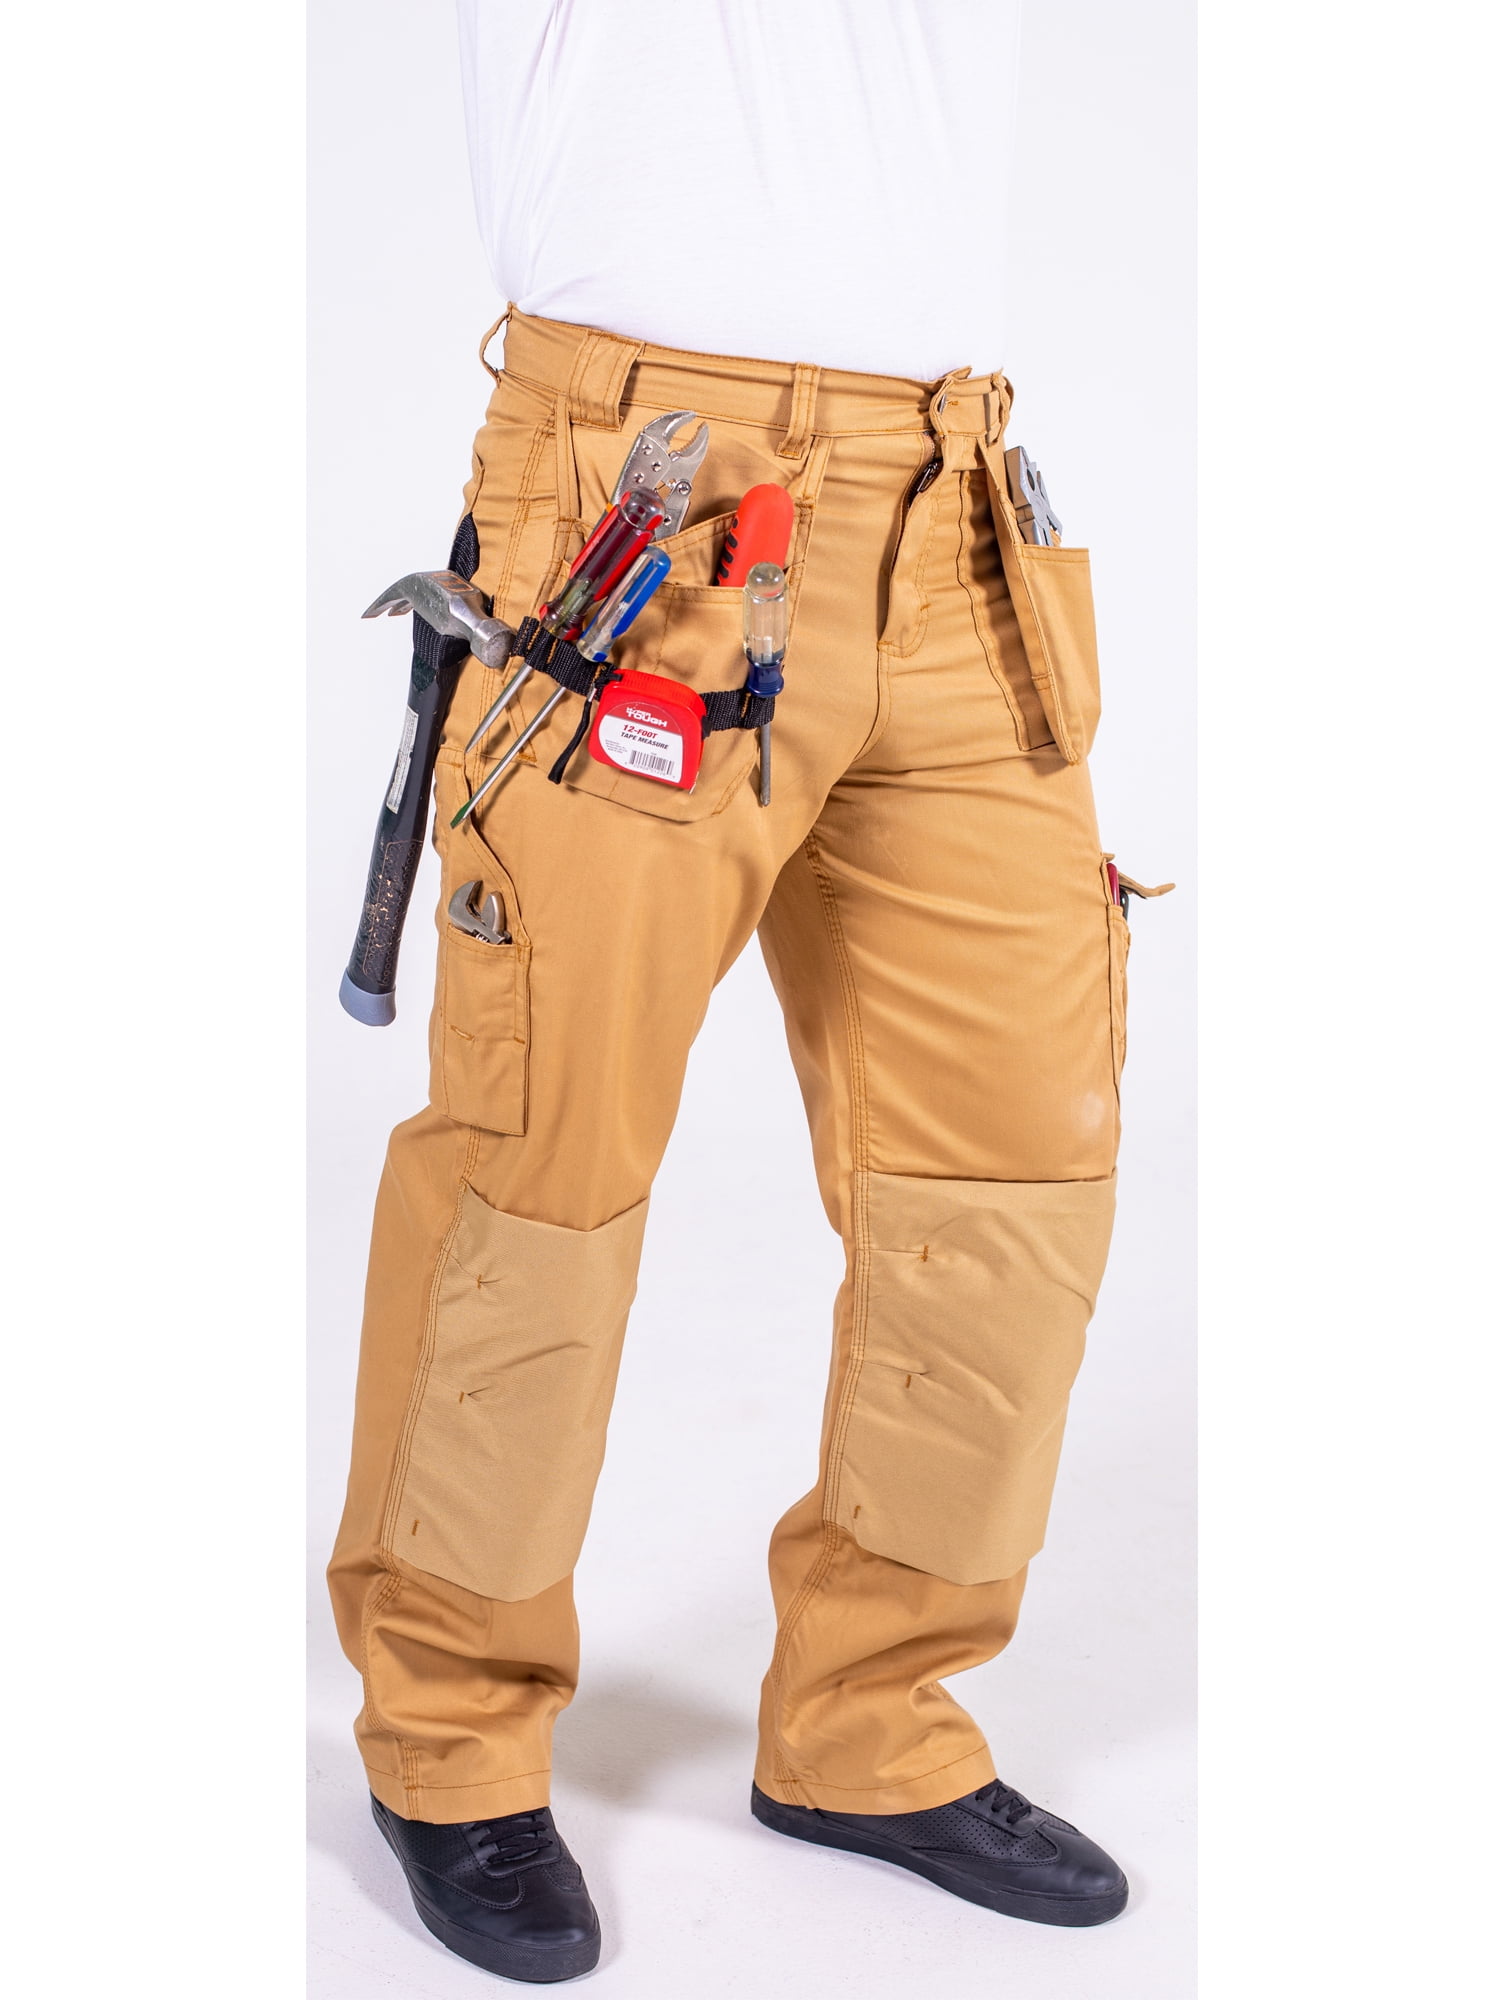 Qaswa Mens Workwear Trousers Safety Cargo Combat Cordura Knee Reinforced Utility Work Pant